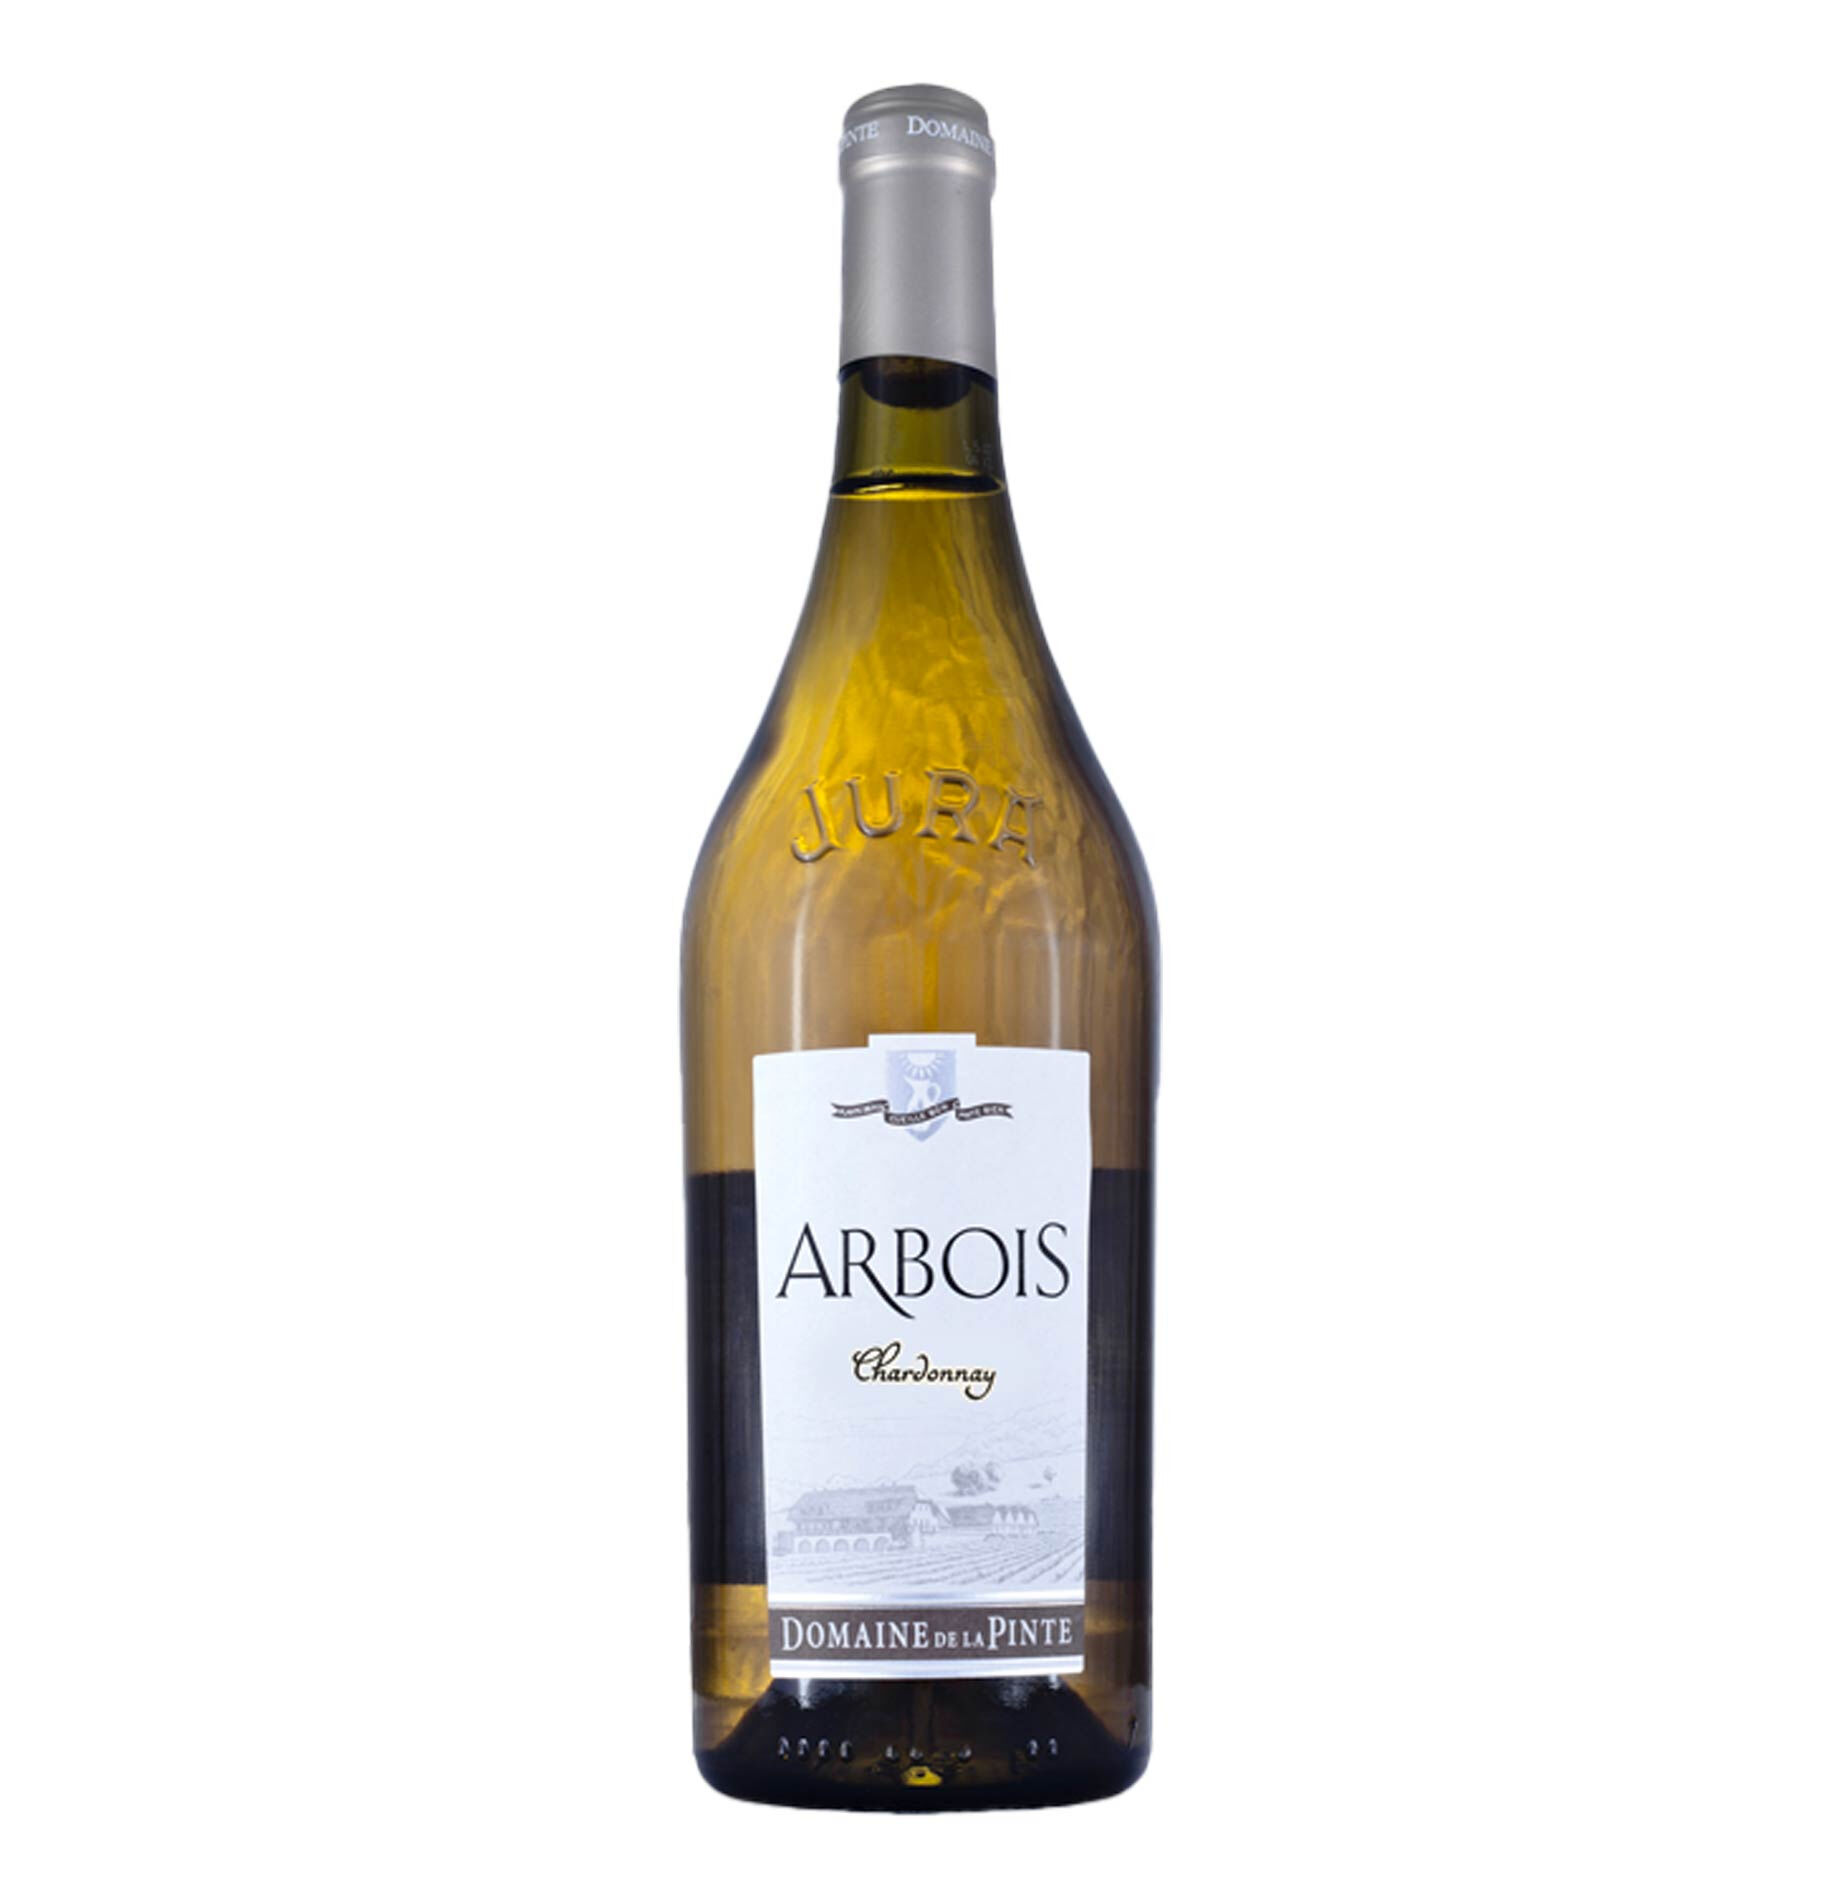 Domaine de la Pinte Arbois Chardonnay Aoc 2020